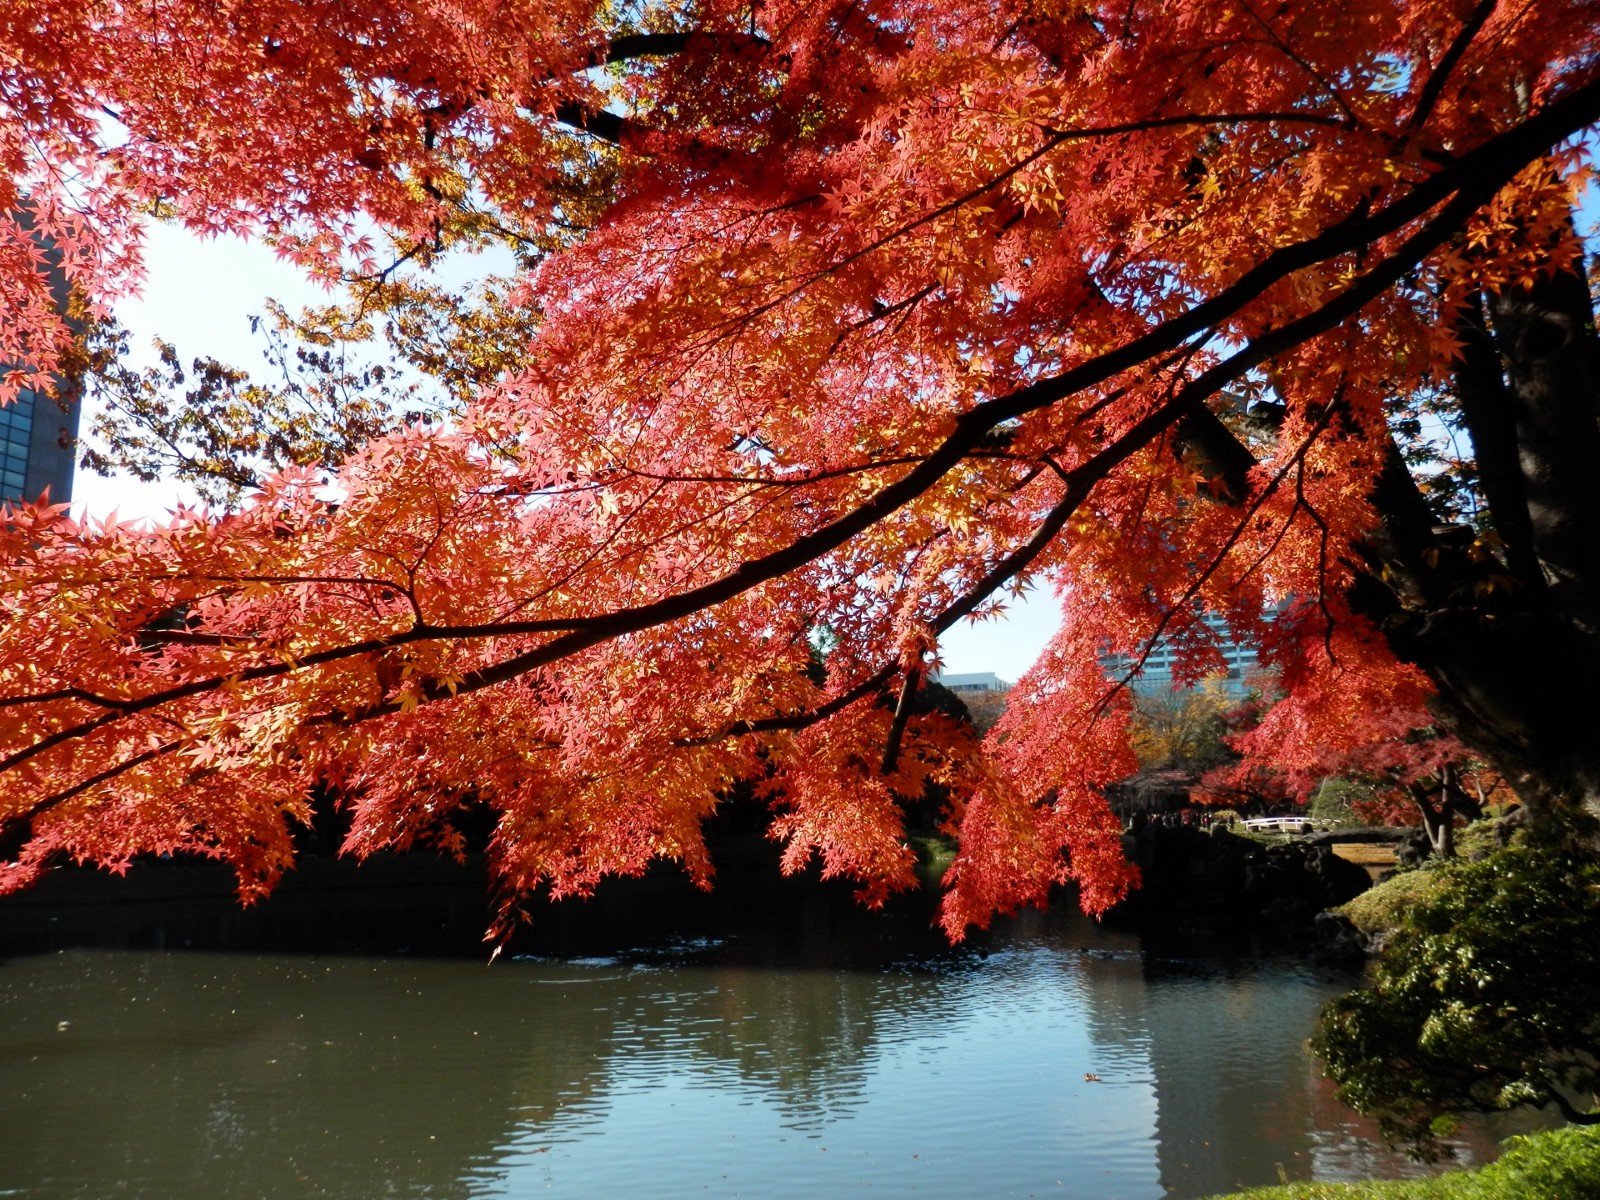 Colourful autumn leaves at Koishikawa Korakuen Garden